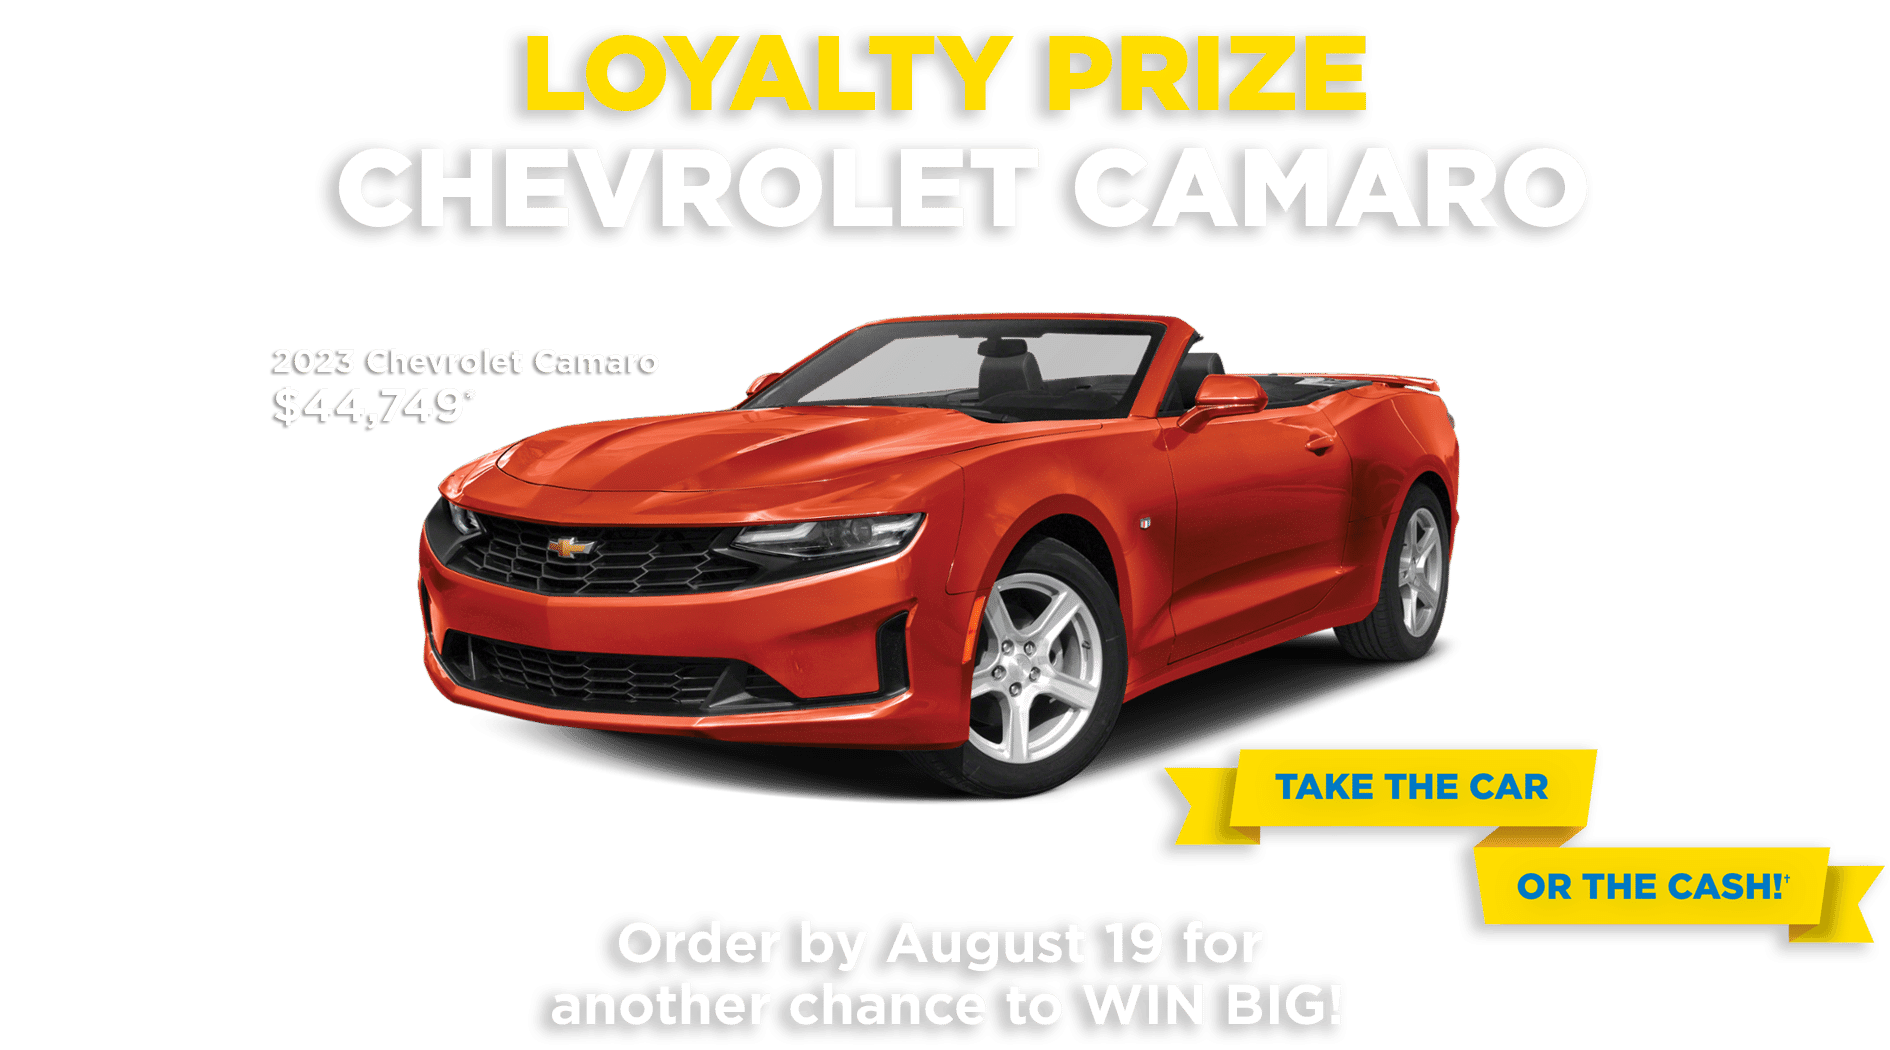 Loyalty Prize - Chevrolet Camaro